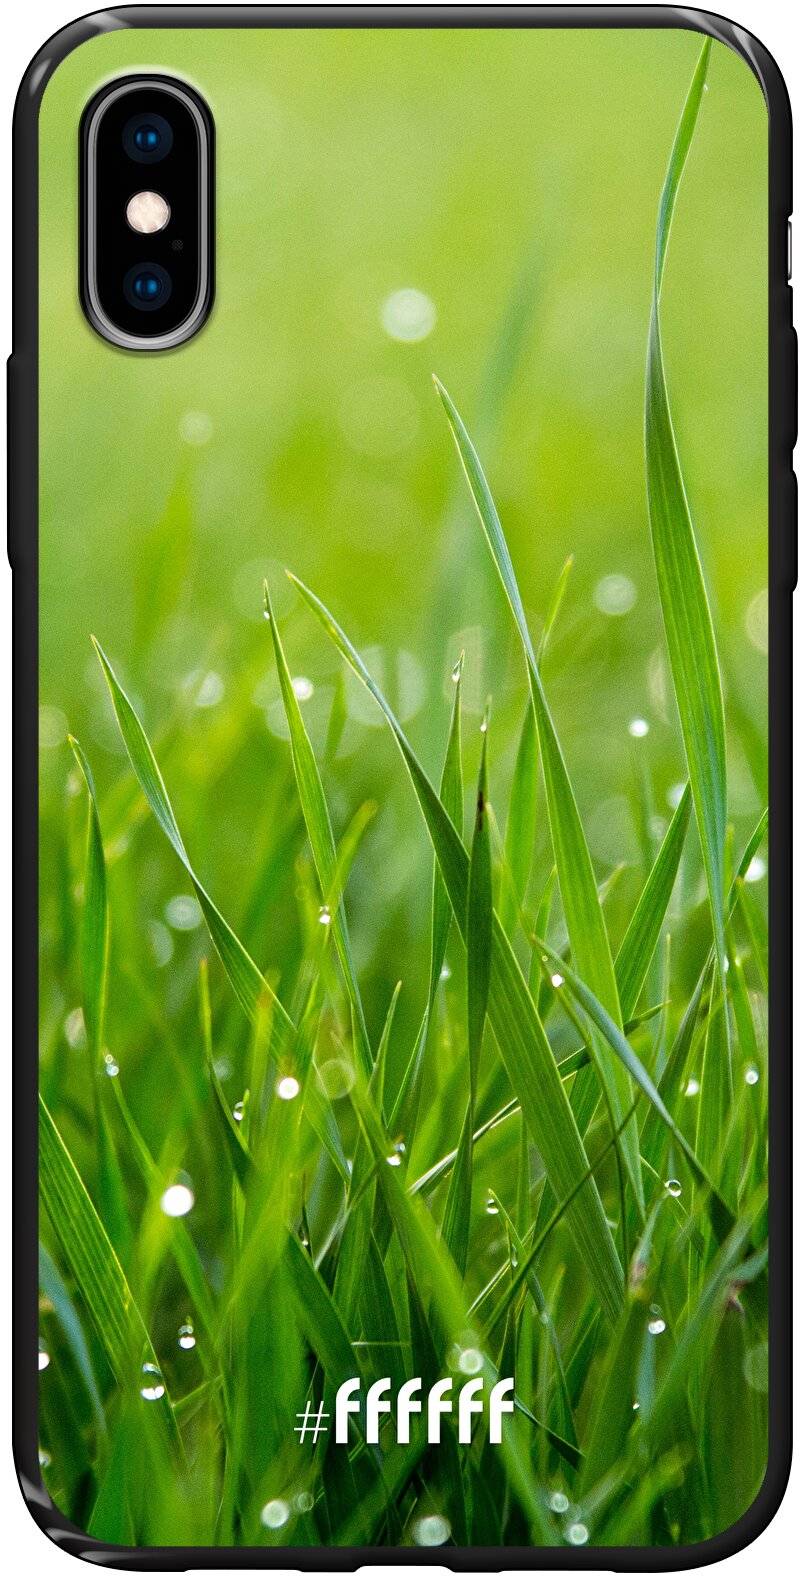 Morning Dew iPhone X